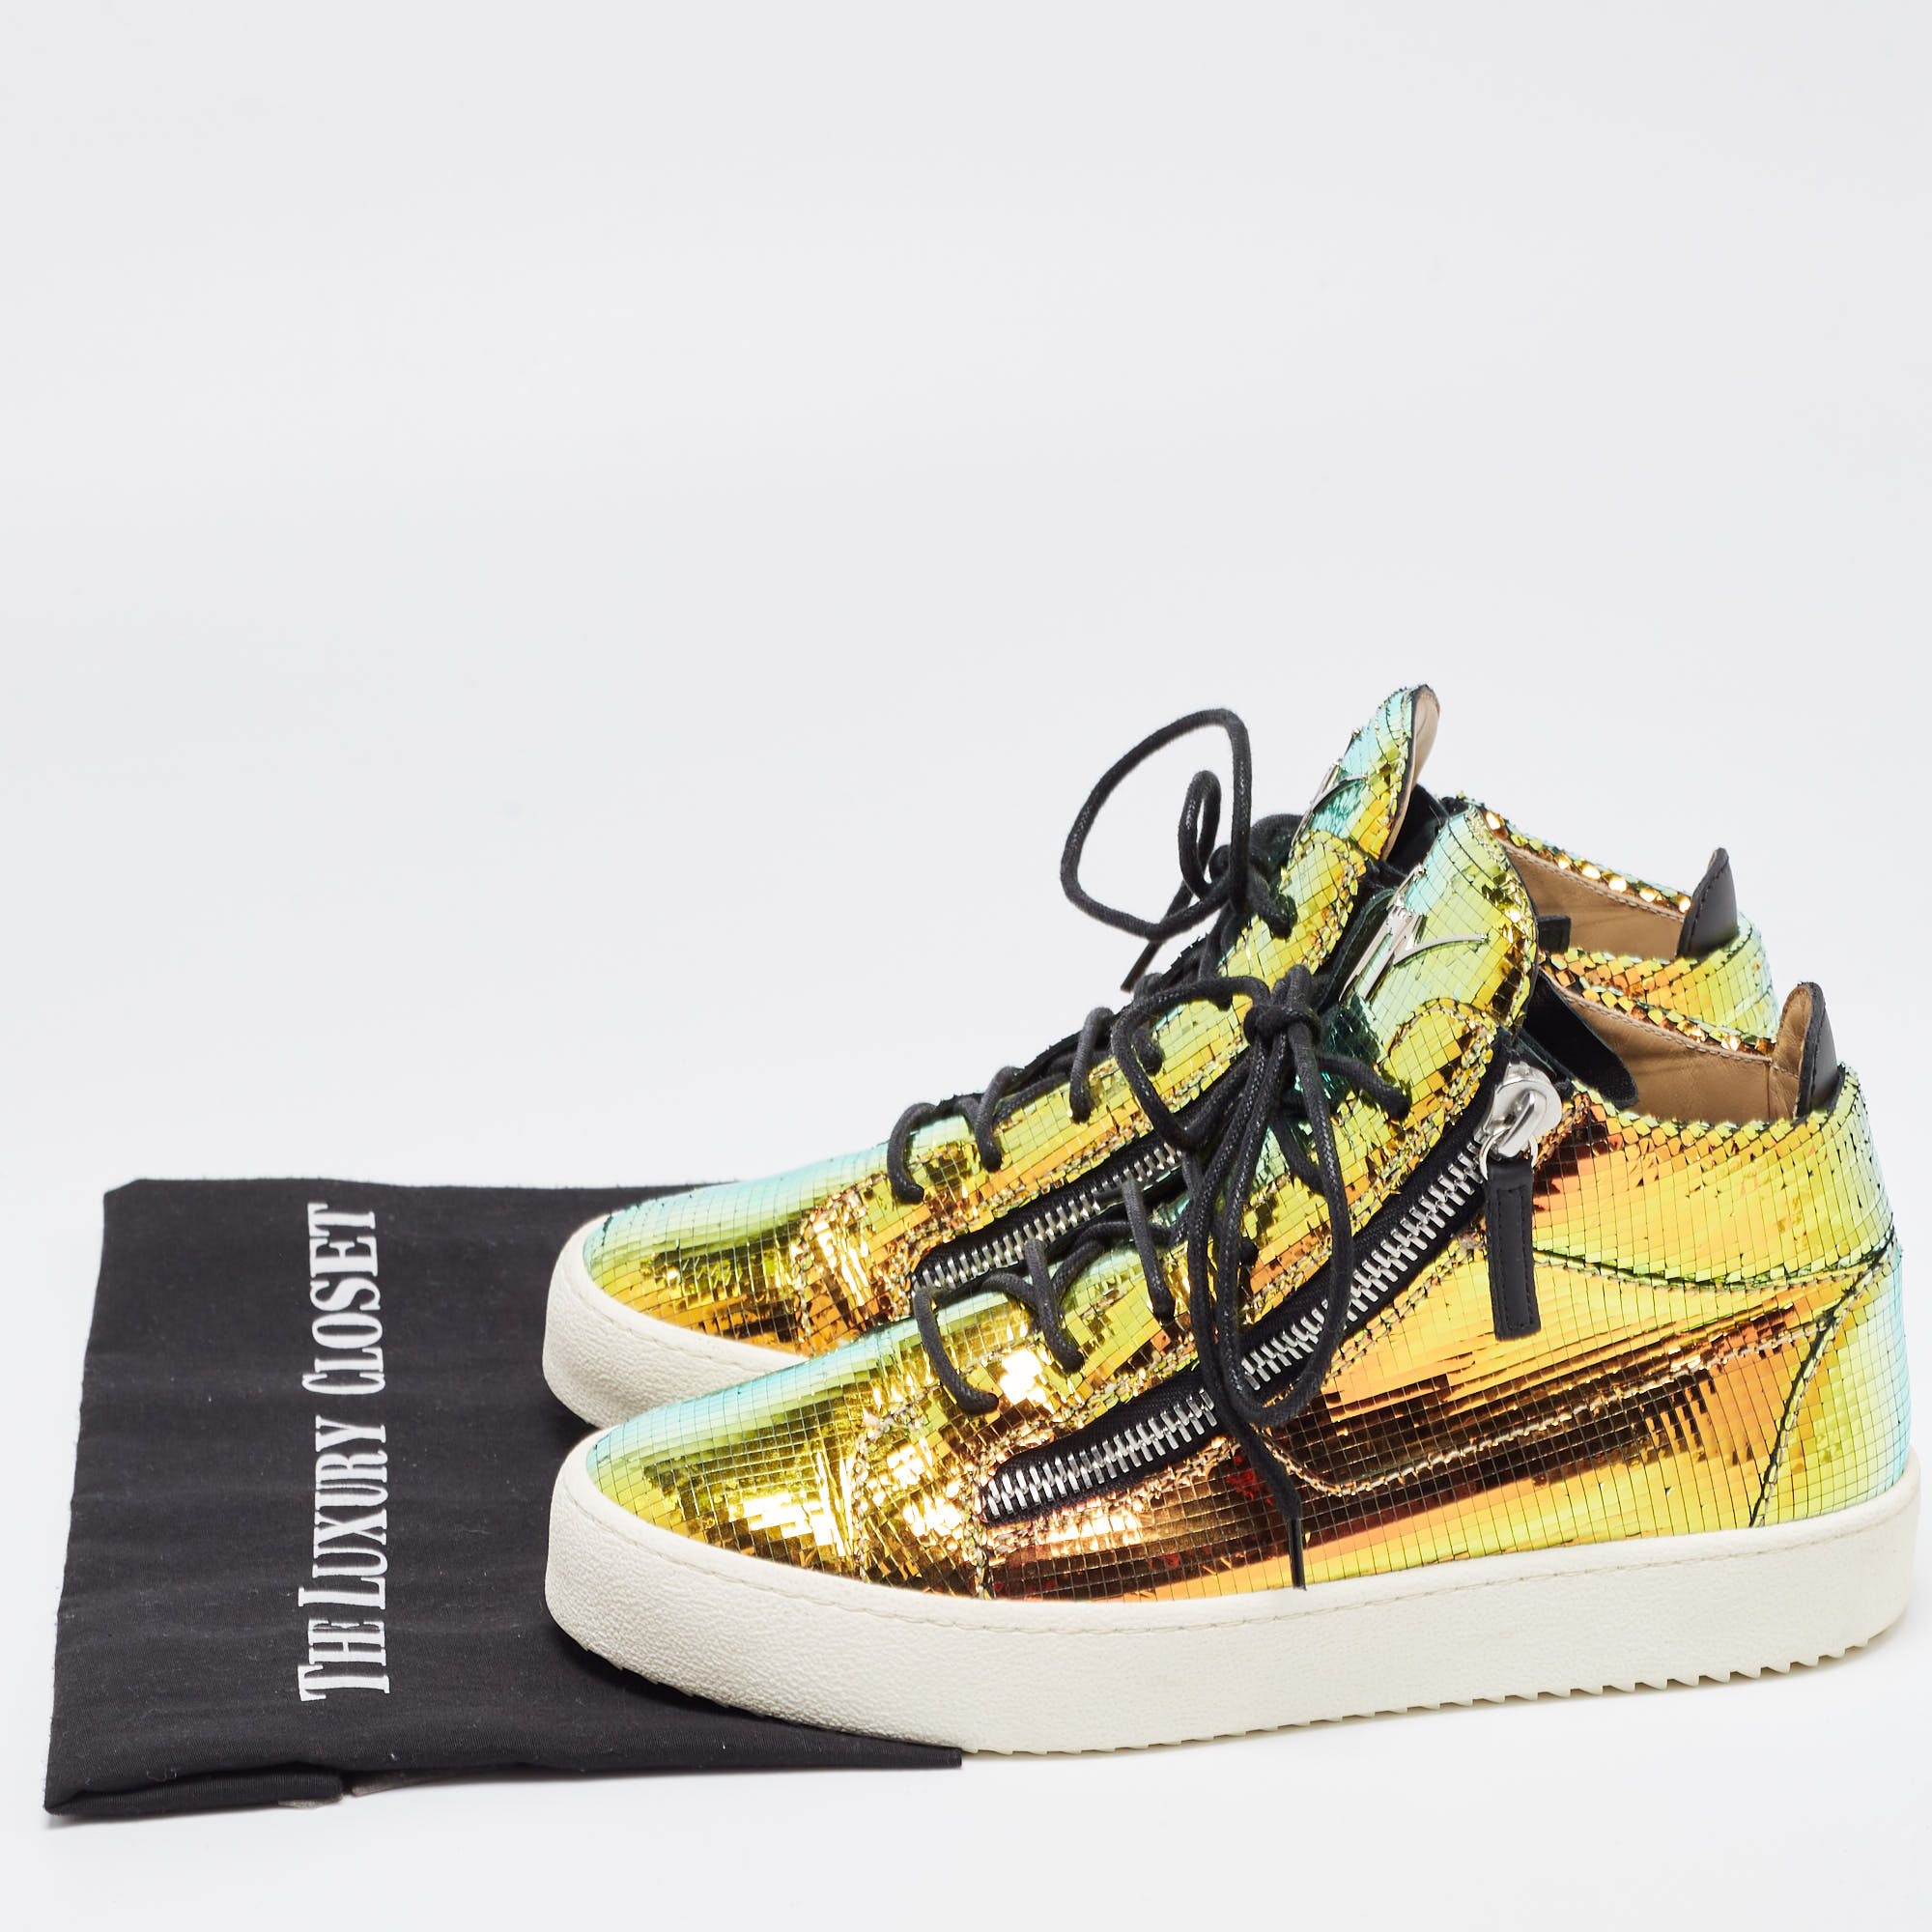 Giuseppe Zanotti Multicolor Foil Leather High Top Sneakers Size 41